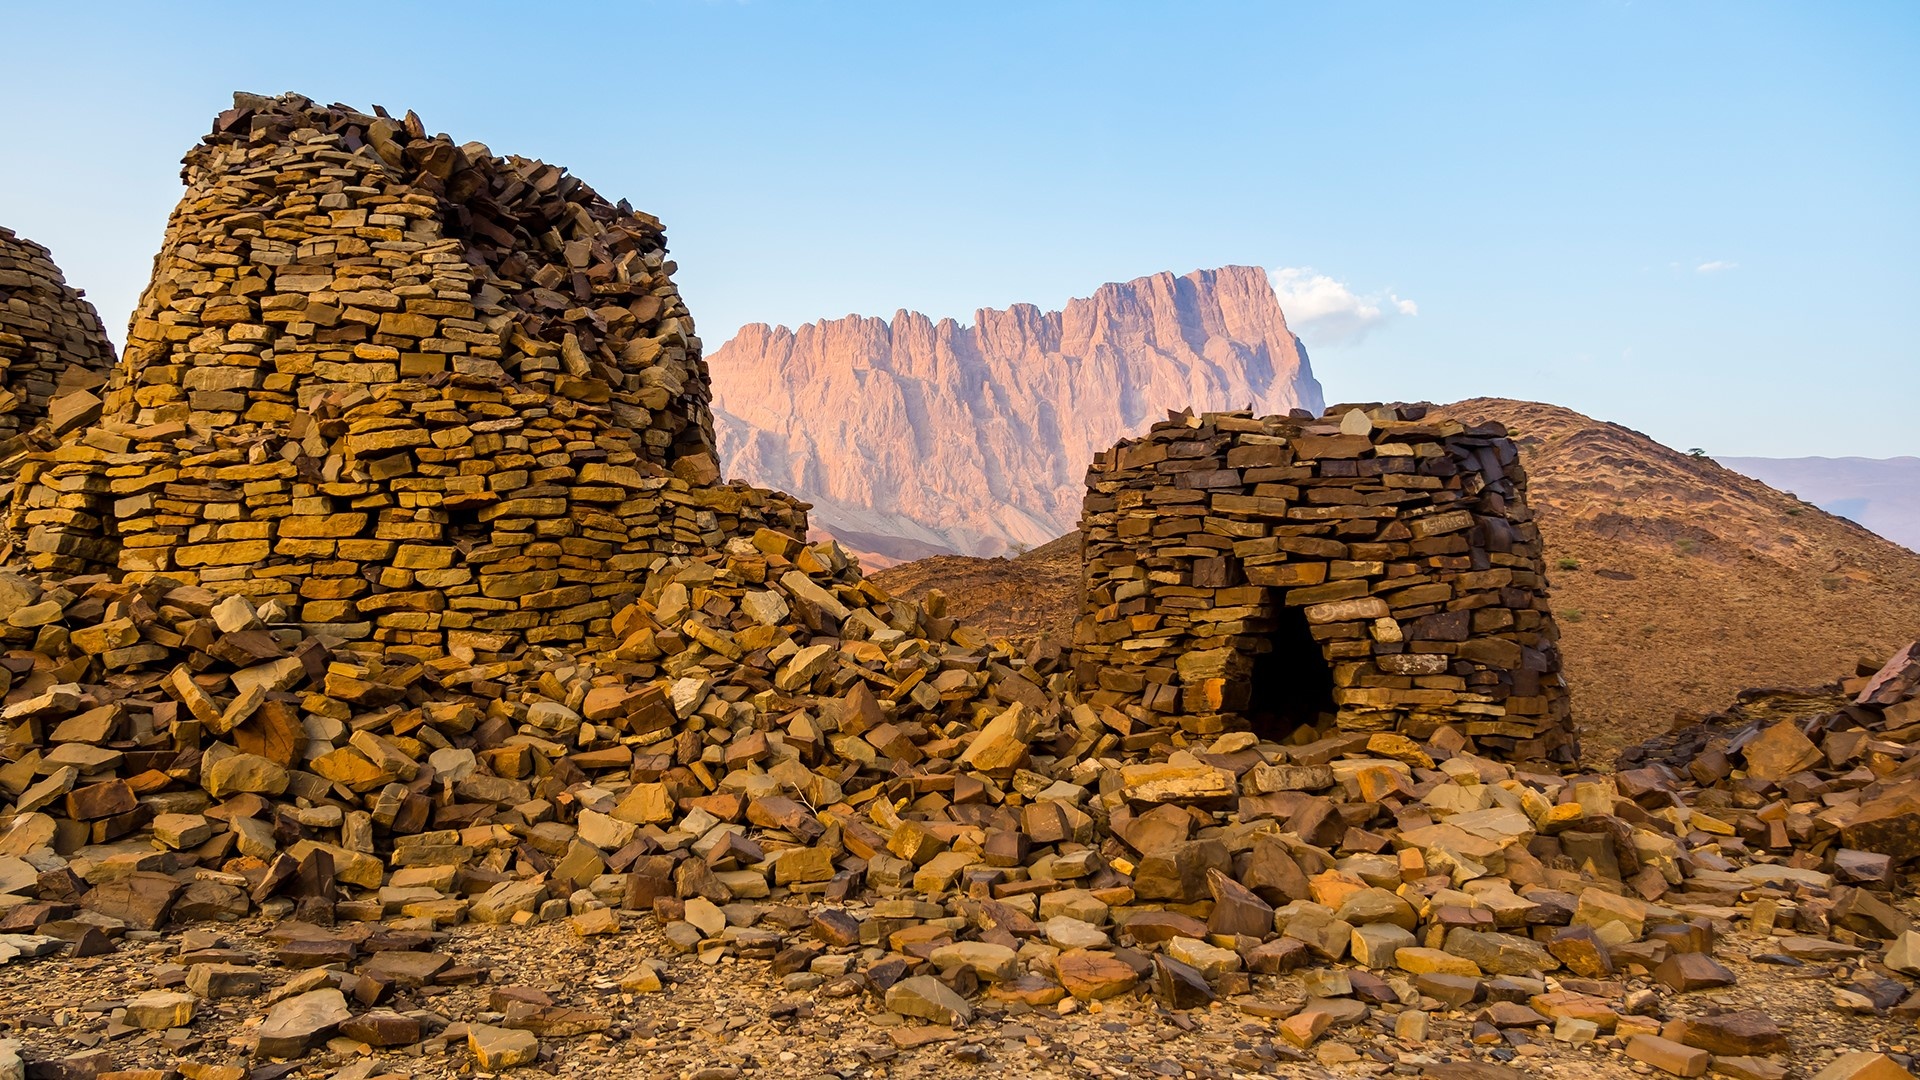 Oman: Archaeological Site, Al-Ain, Jabal Misht, Ad-Dakhiliyah. 1920x1080 Full HD Wallpaper.